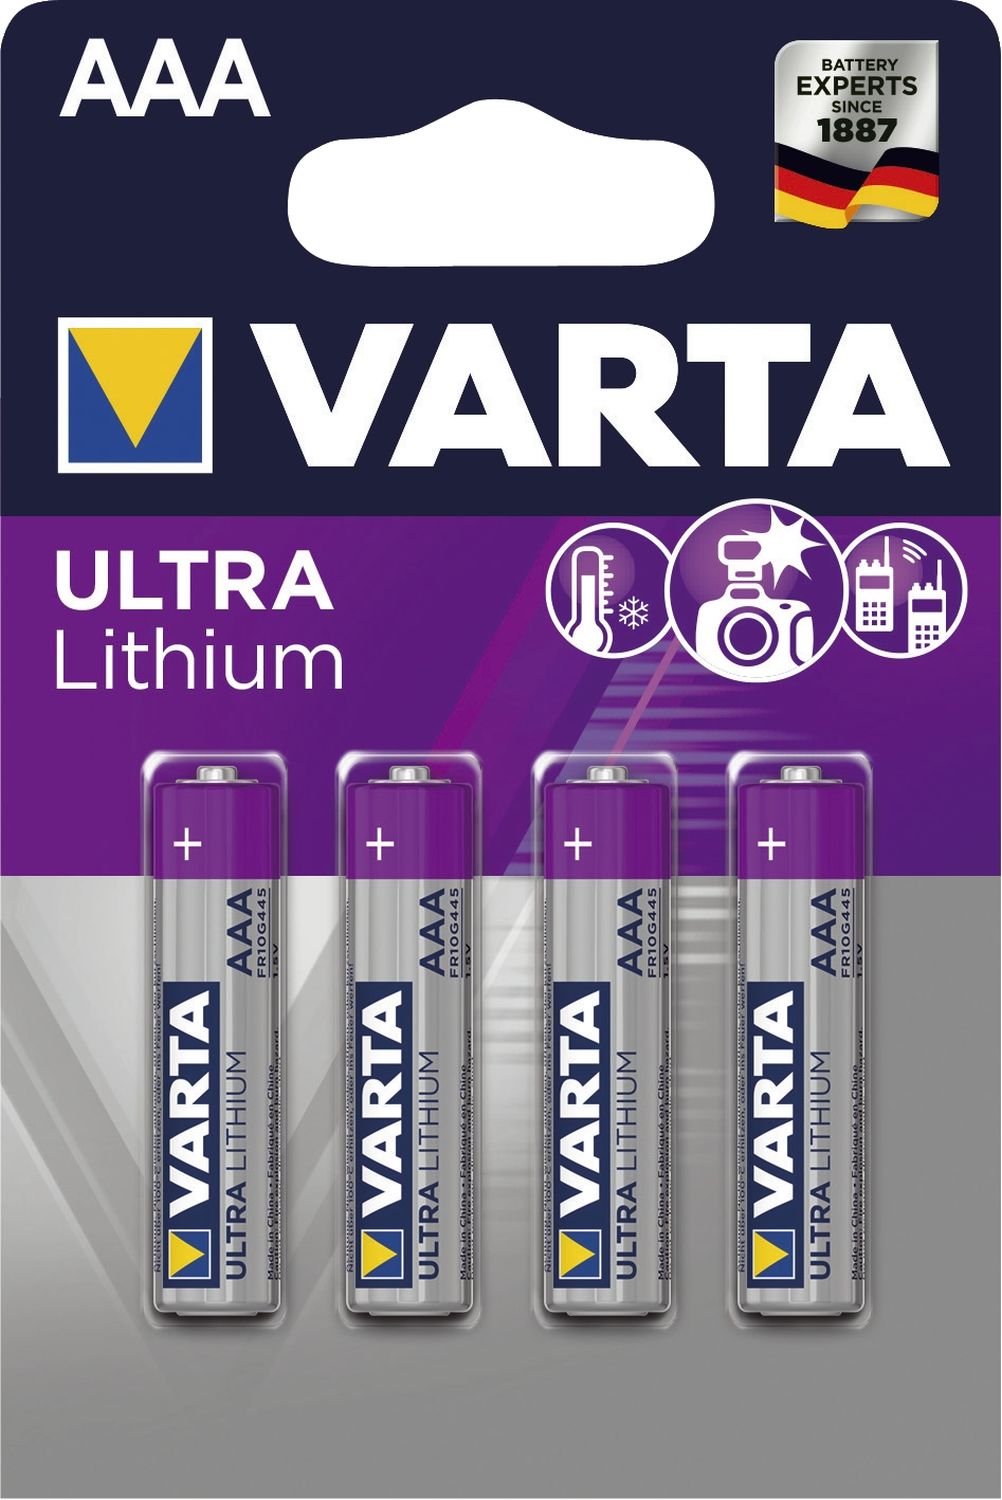 Batterien Ultra Lithium - Micro/AAA, 1,5 V